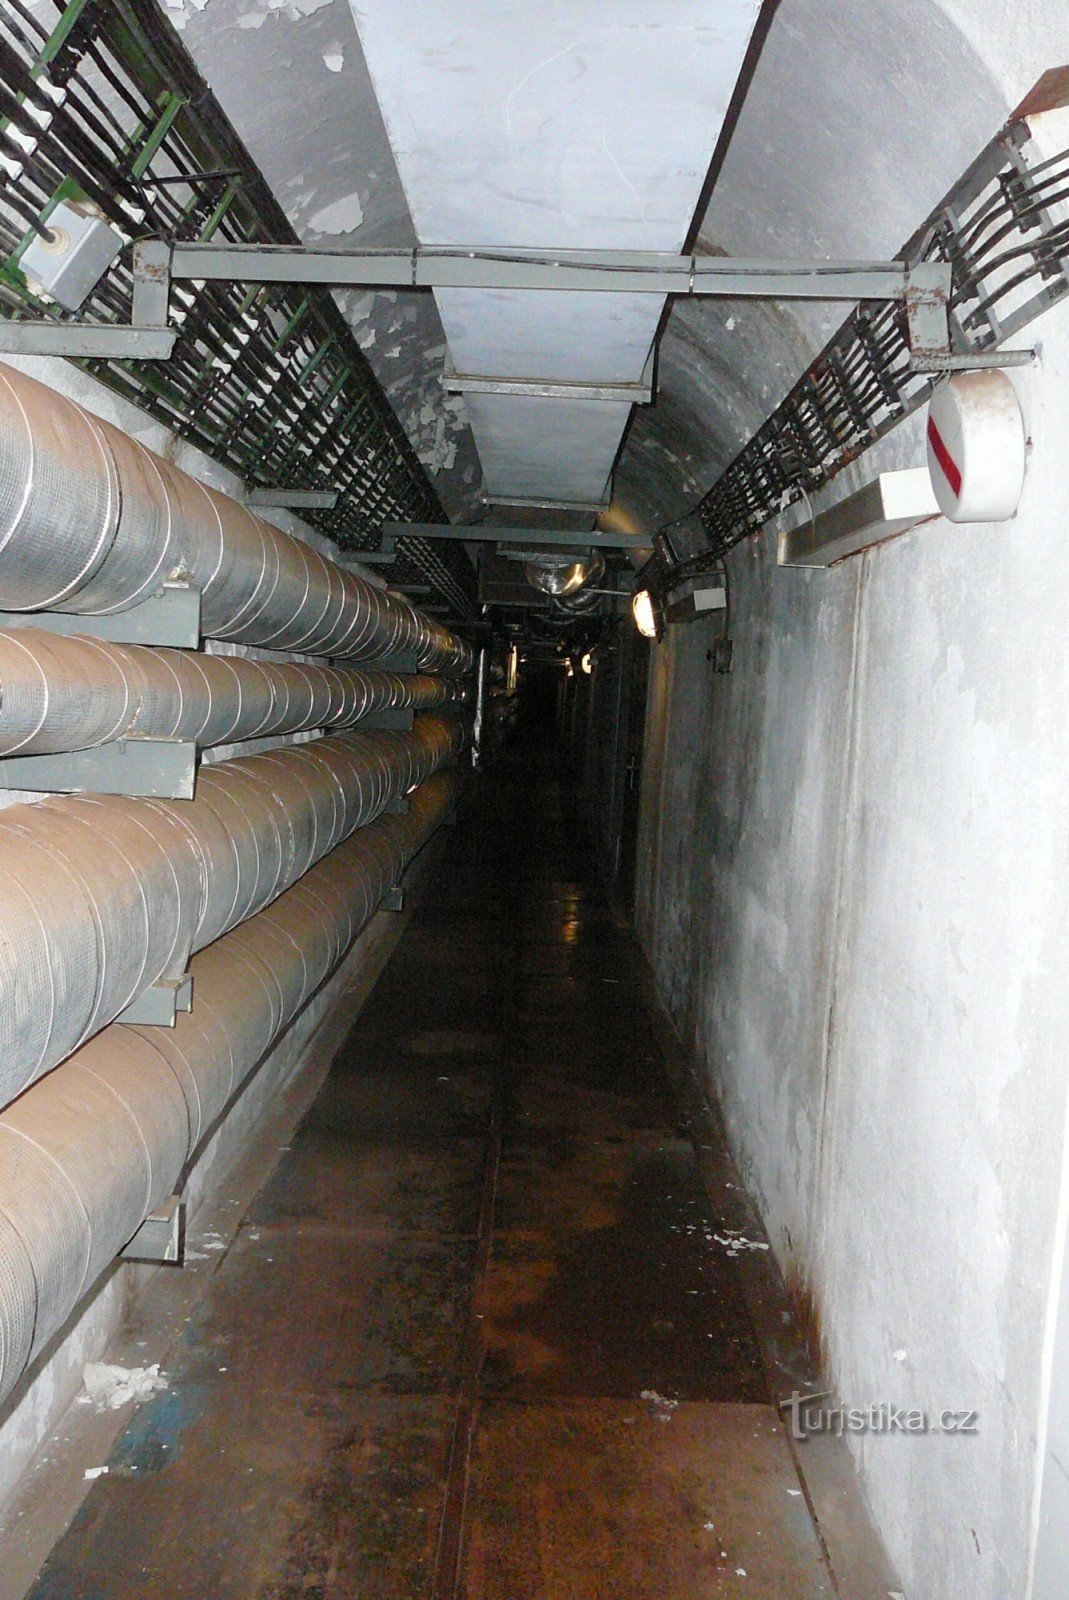 600 metrov dolg podzemni prehod